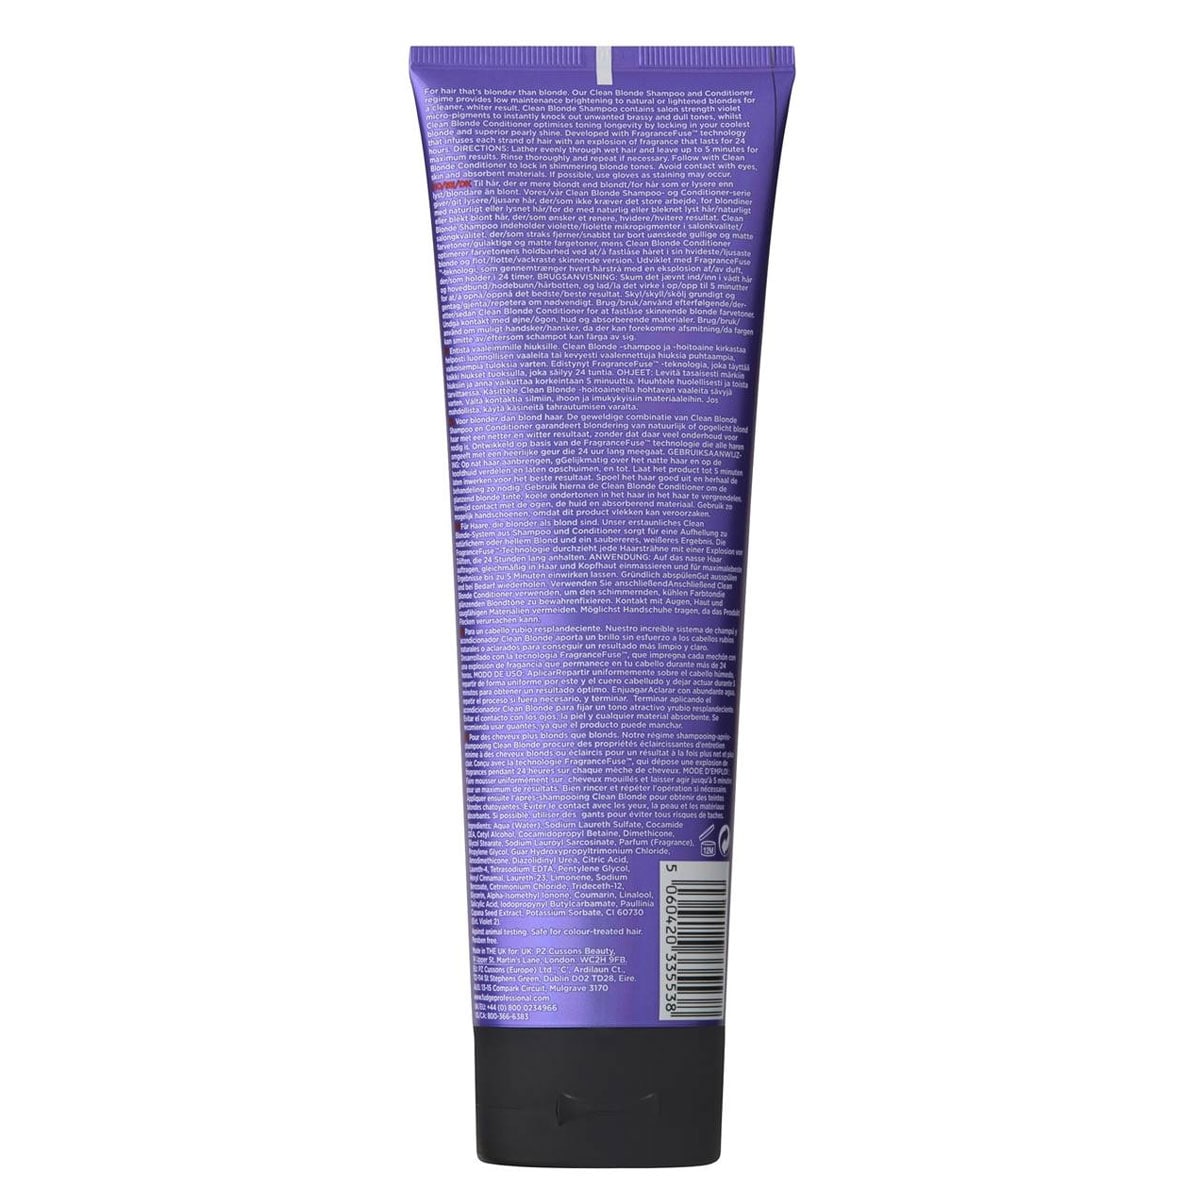 Fudge Clean Blonde Violet-Toning Shampoo 250ml